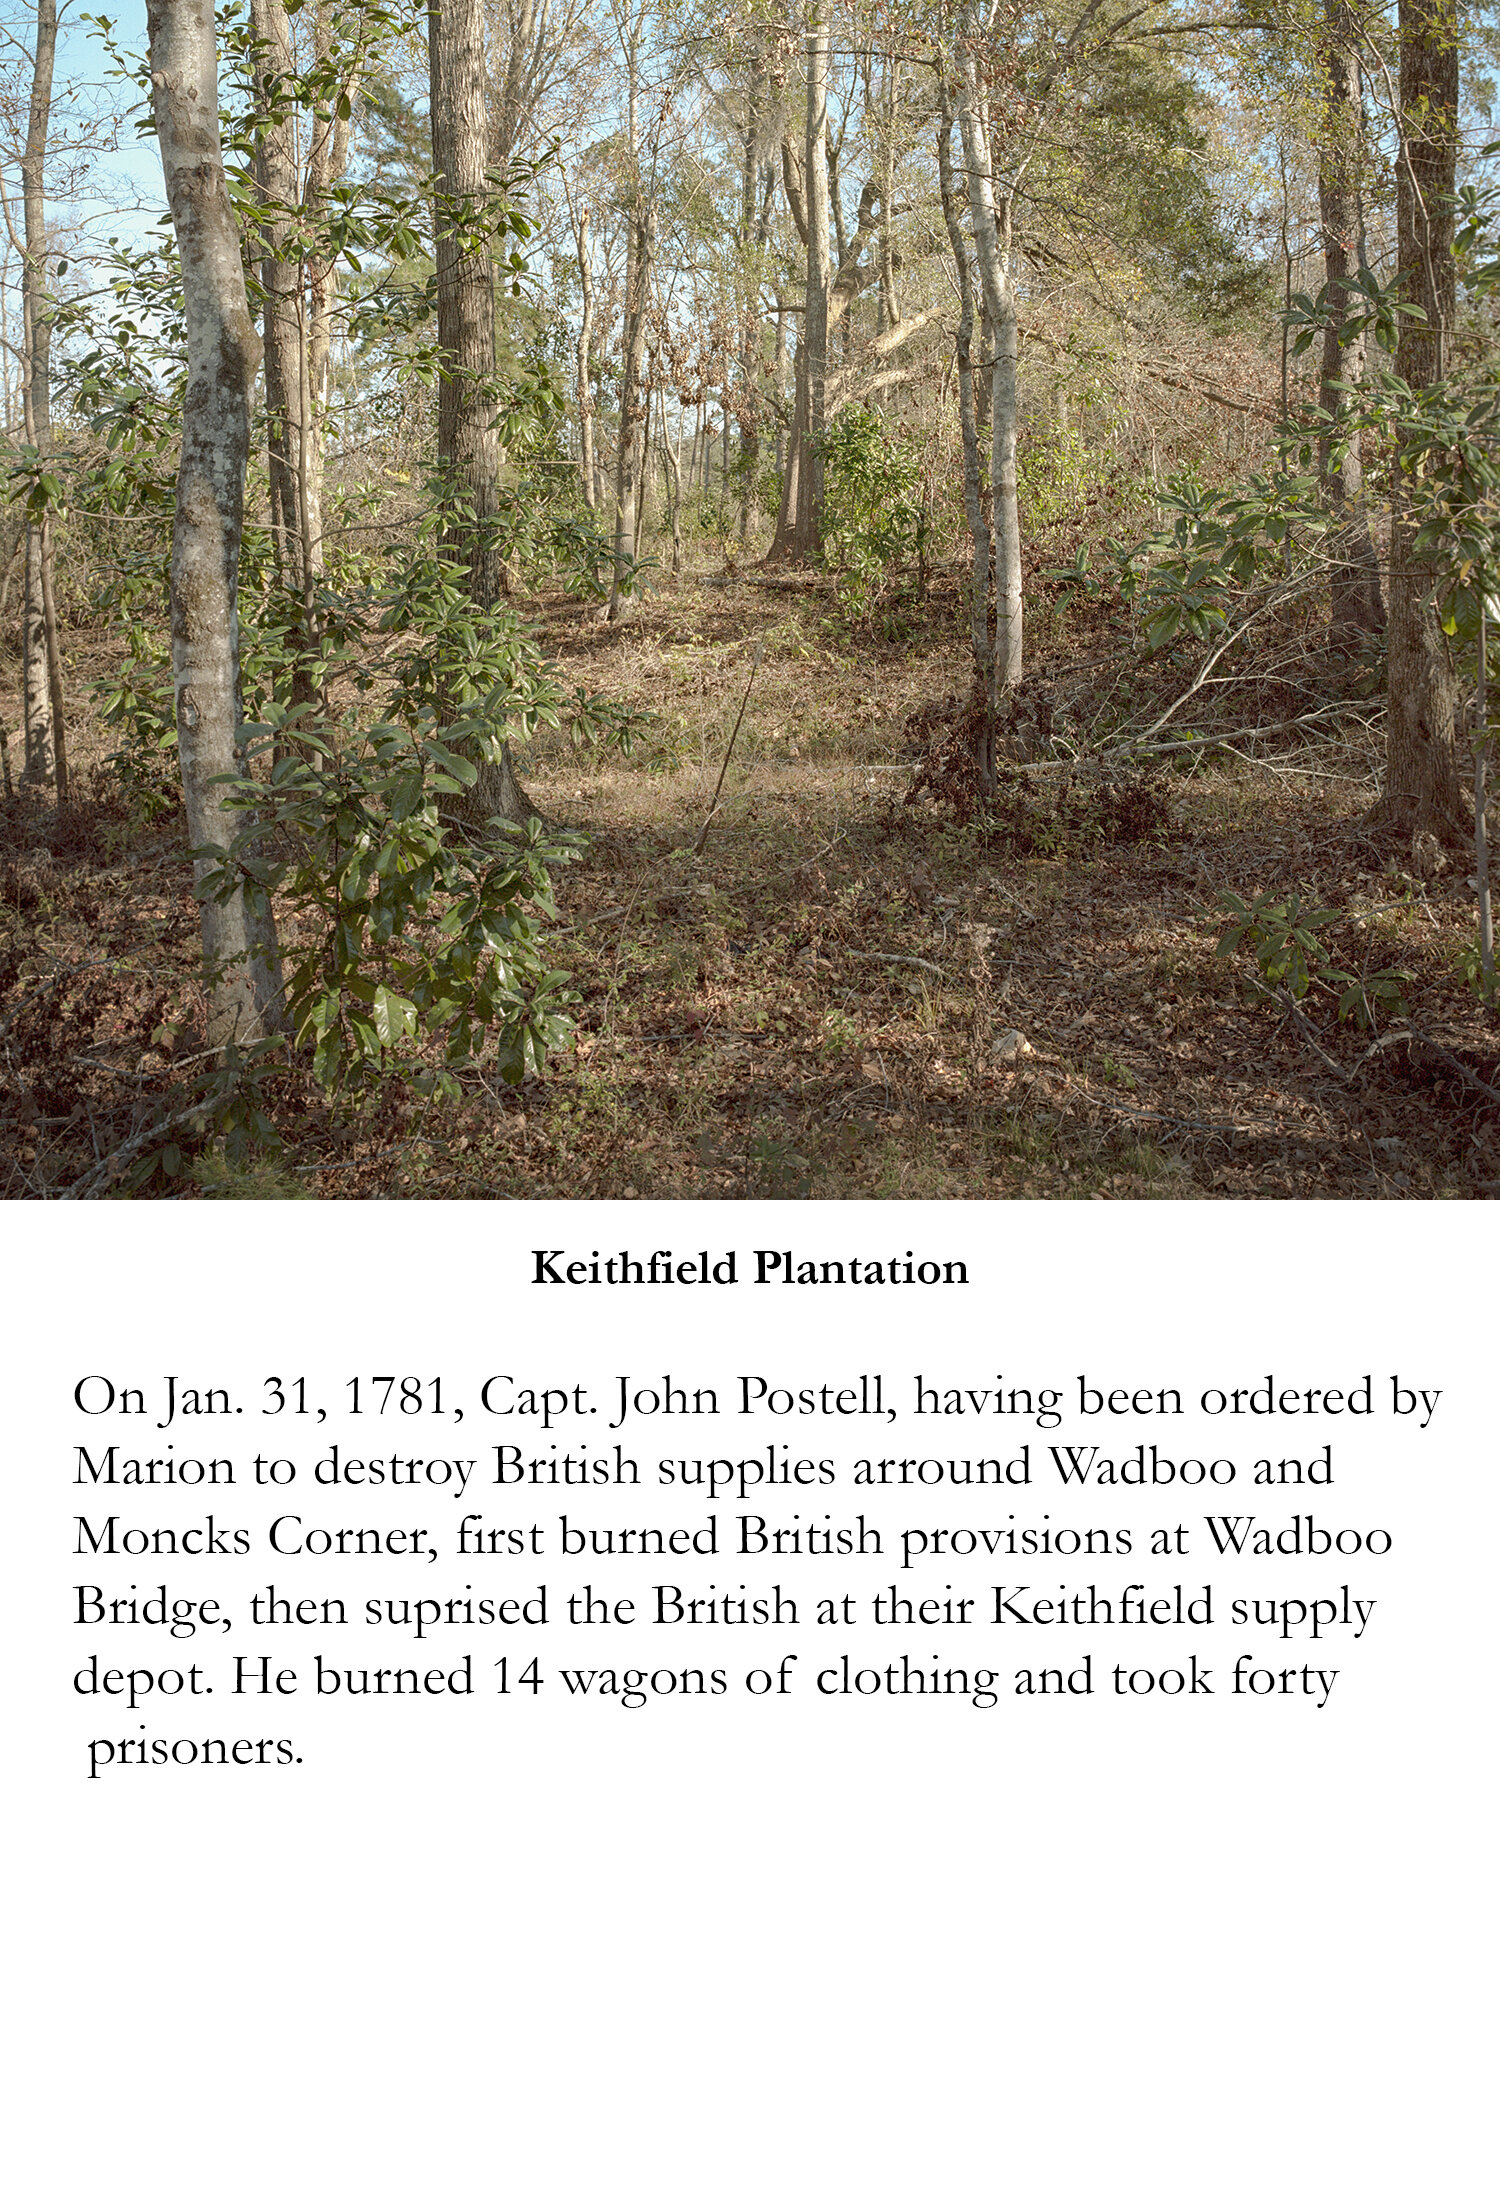 Keithfield Plantation.jpg